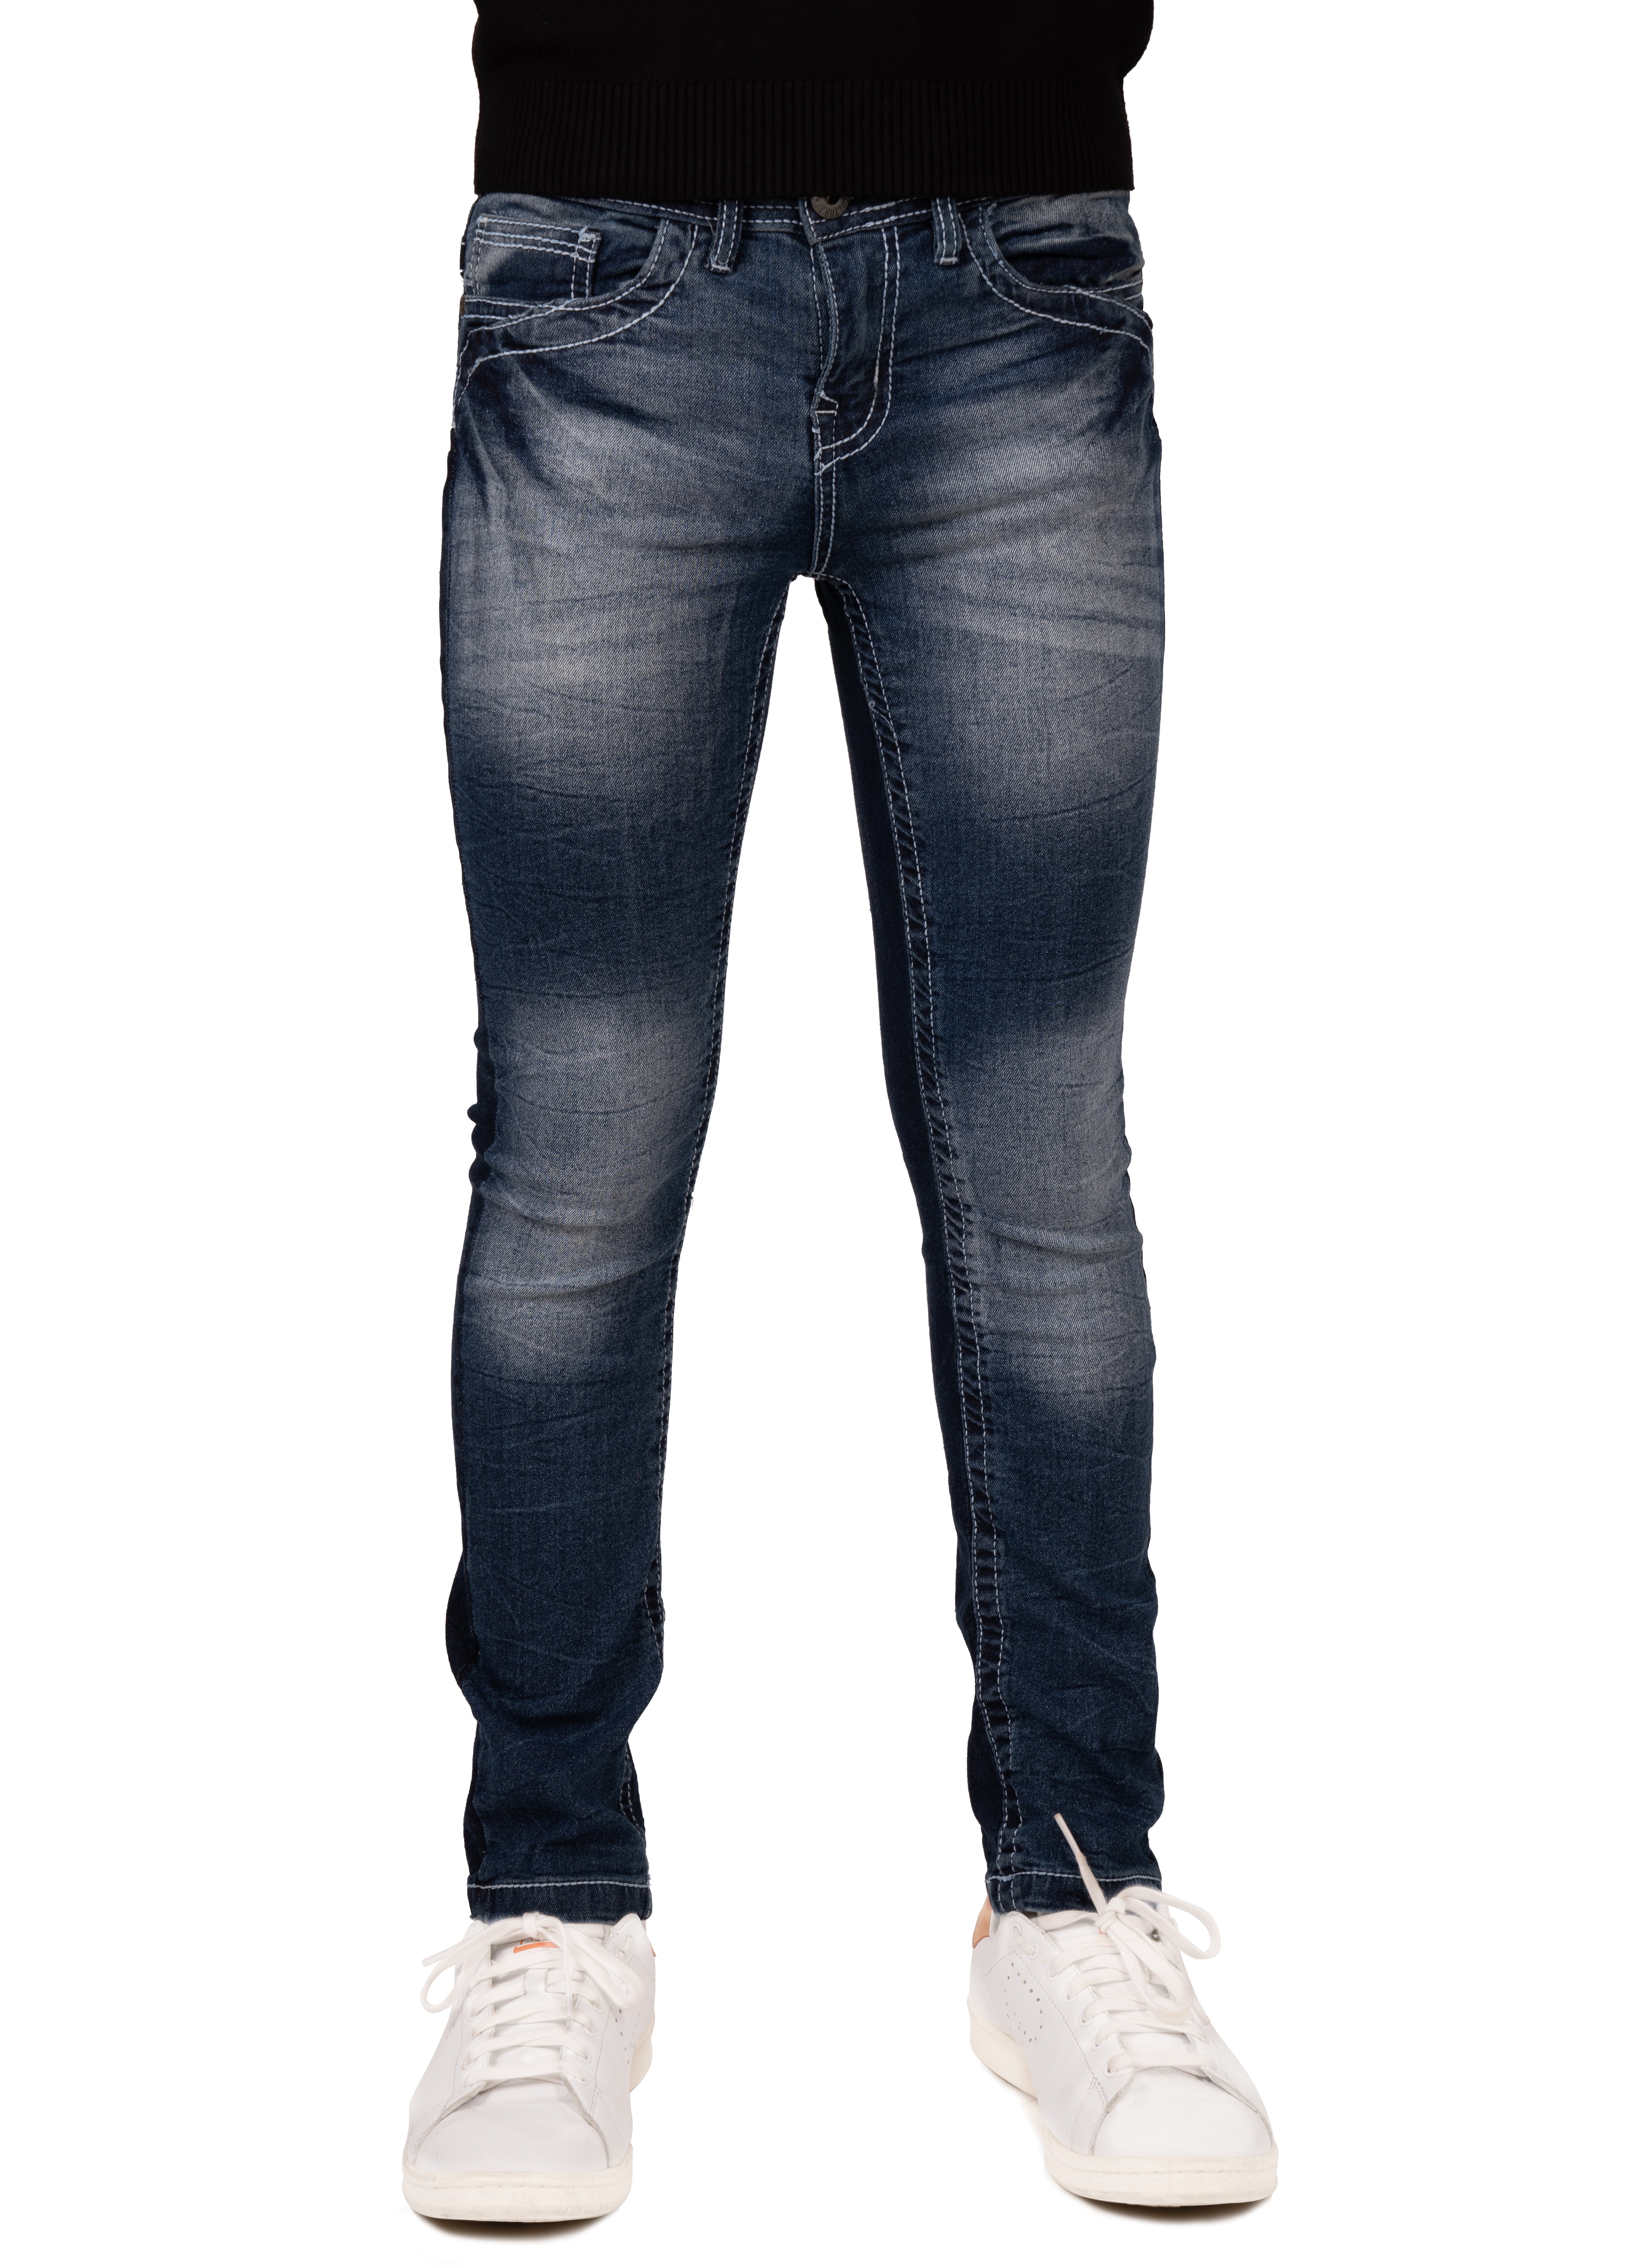 CULTURA Skinny Jeans for Little Slim Pants, Denim Age Boys Comfy Wash Size Stretch 5 Thick Stitch, Blue 3-7